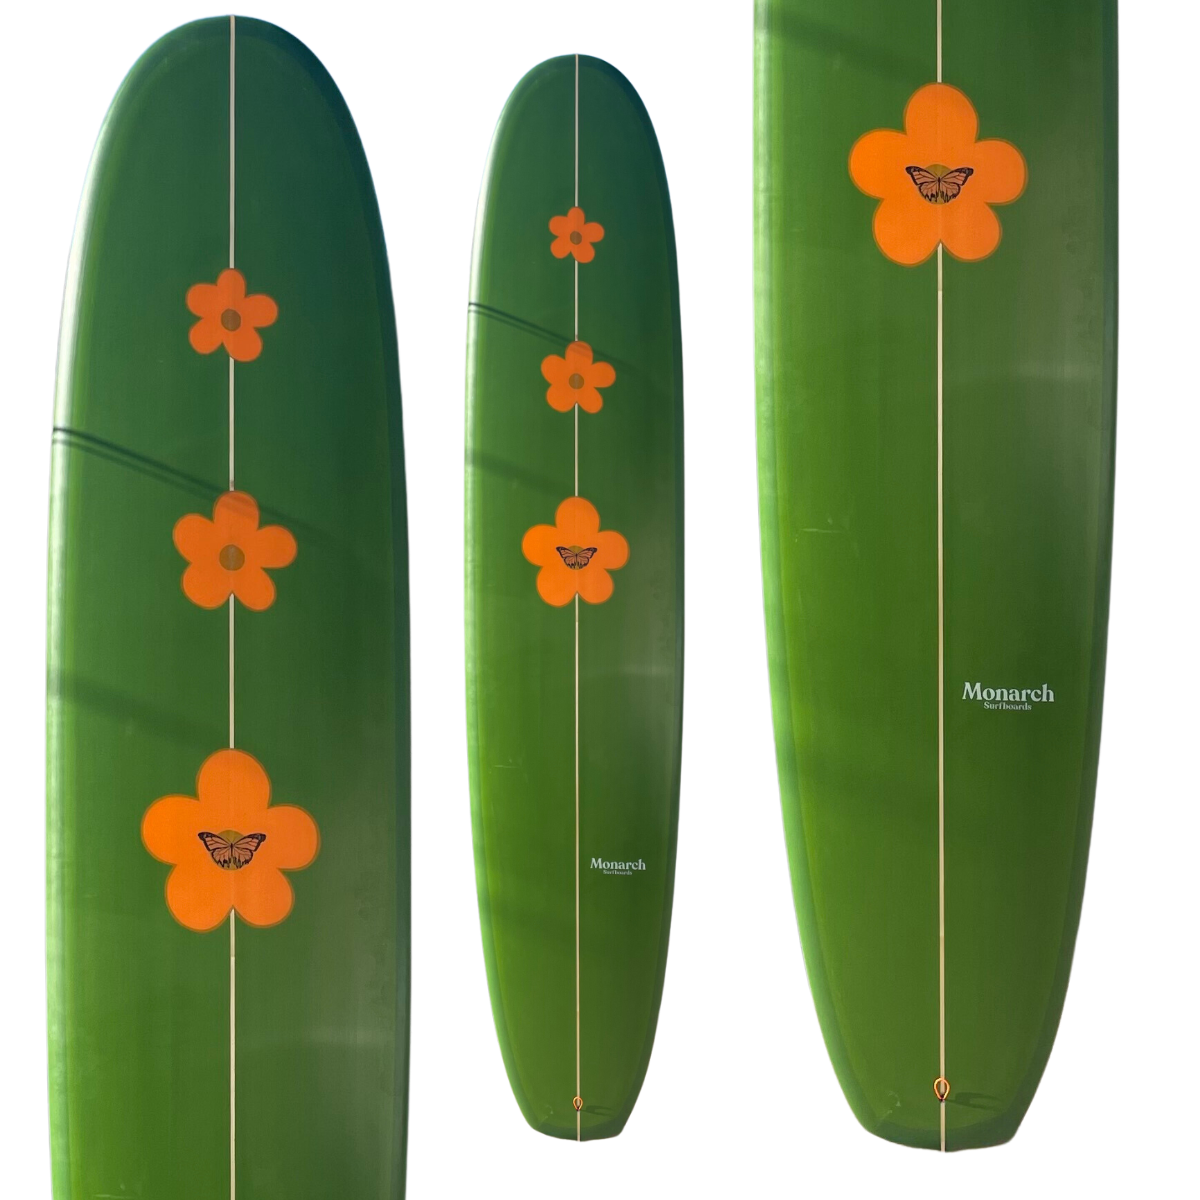 Terrapin Surfboard